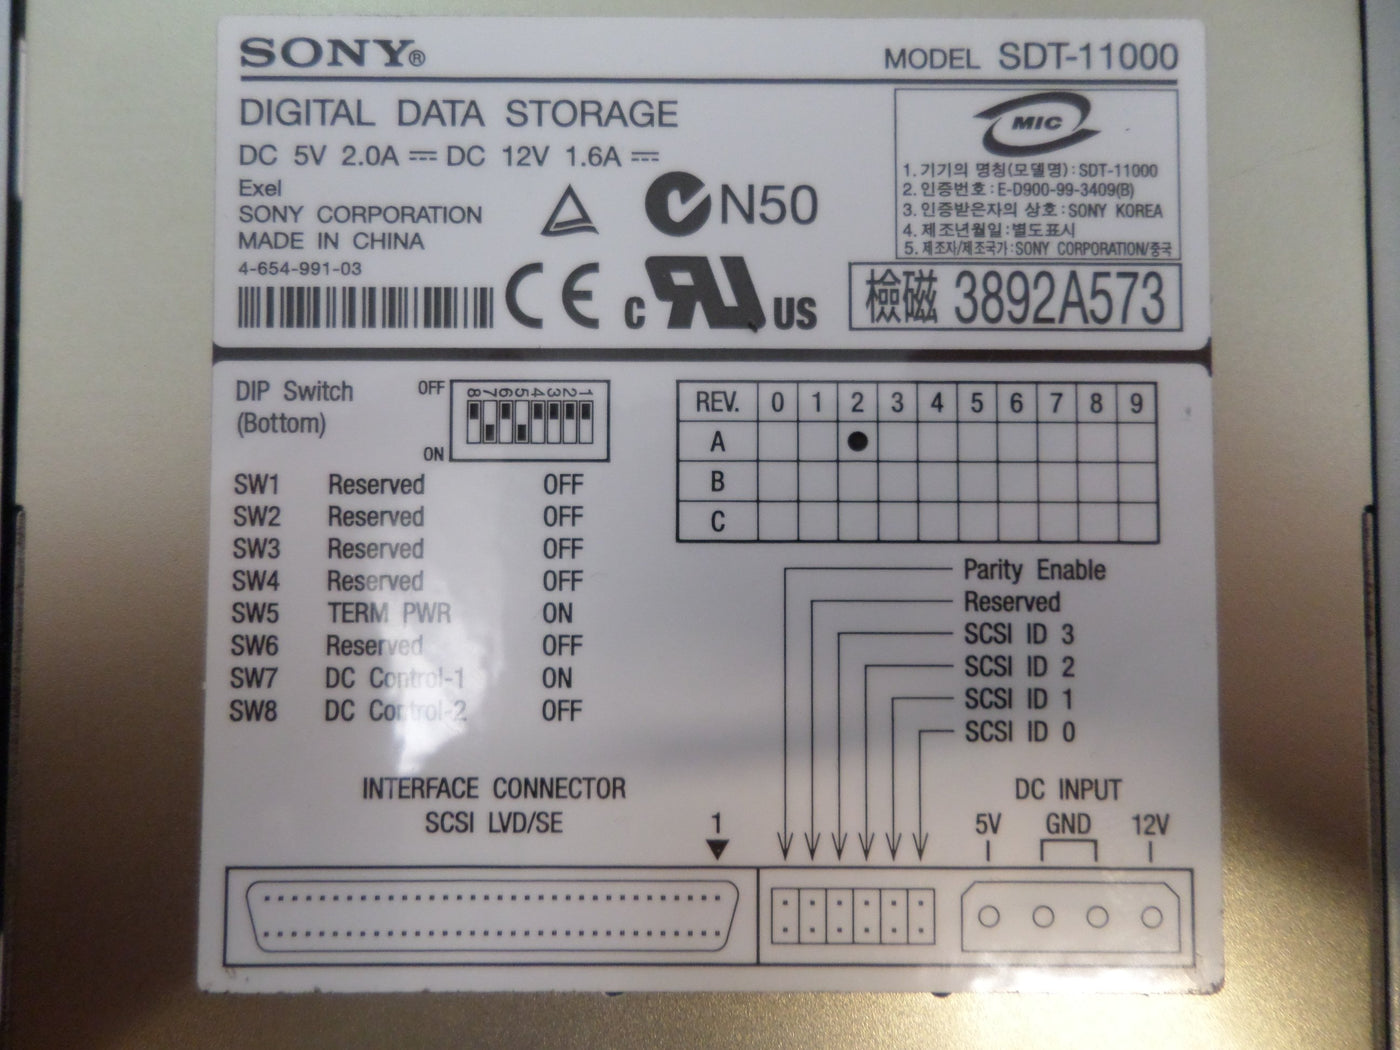 MC5112_SDT-11000_Sony Digital Storage Unit Inc Cable - Image2